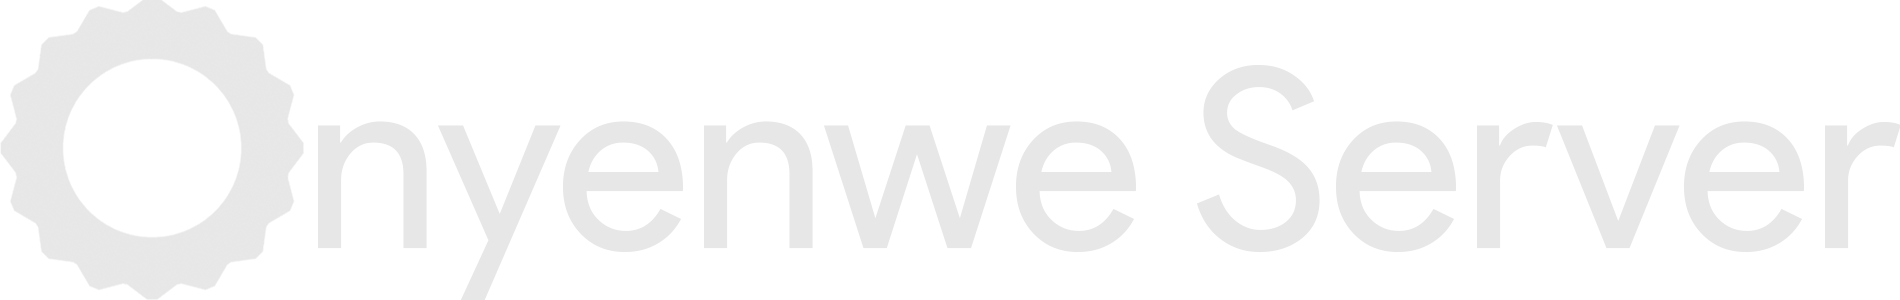 Onyenwe Server Logo